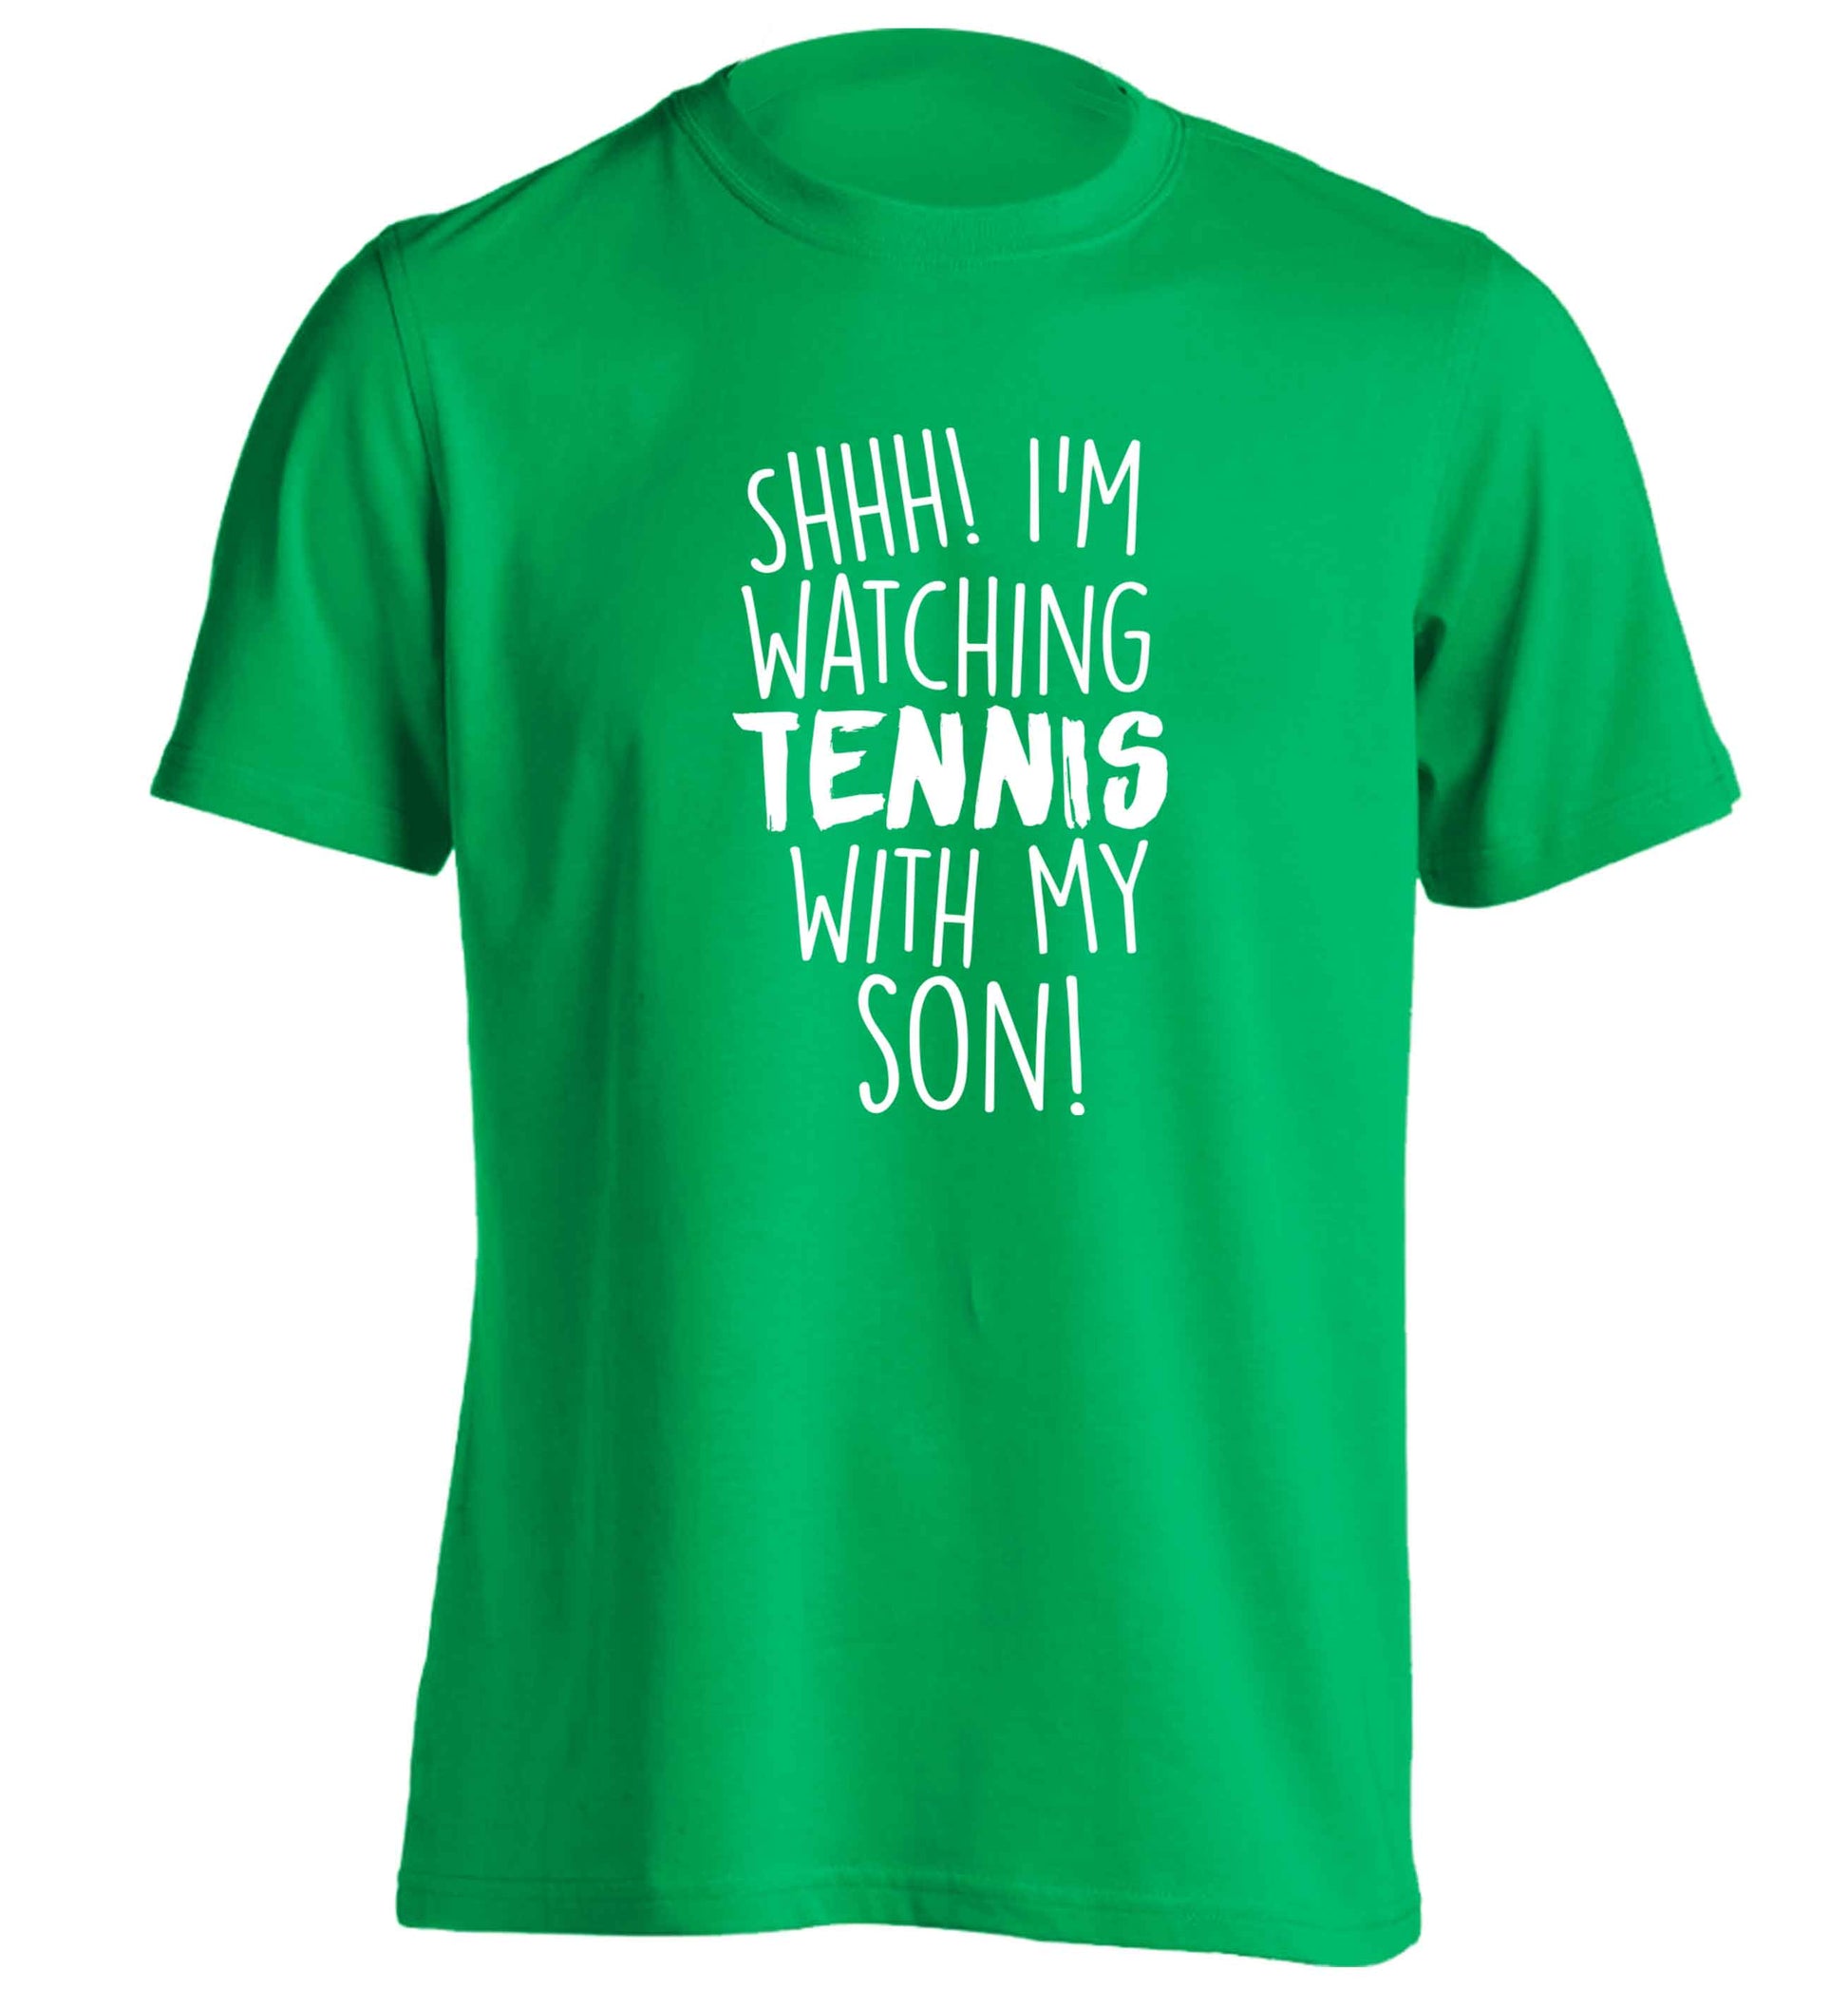 Shh! I'm watching tennis with my son! adults unisex green Tshirt 2XL